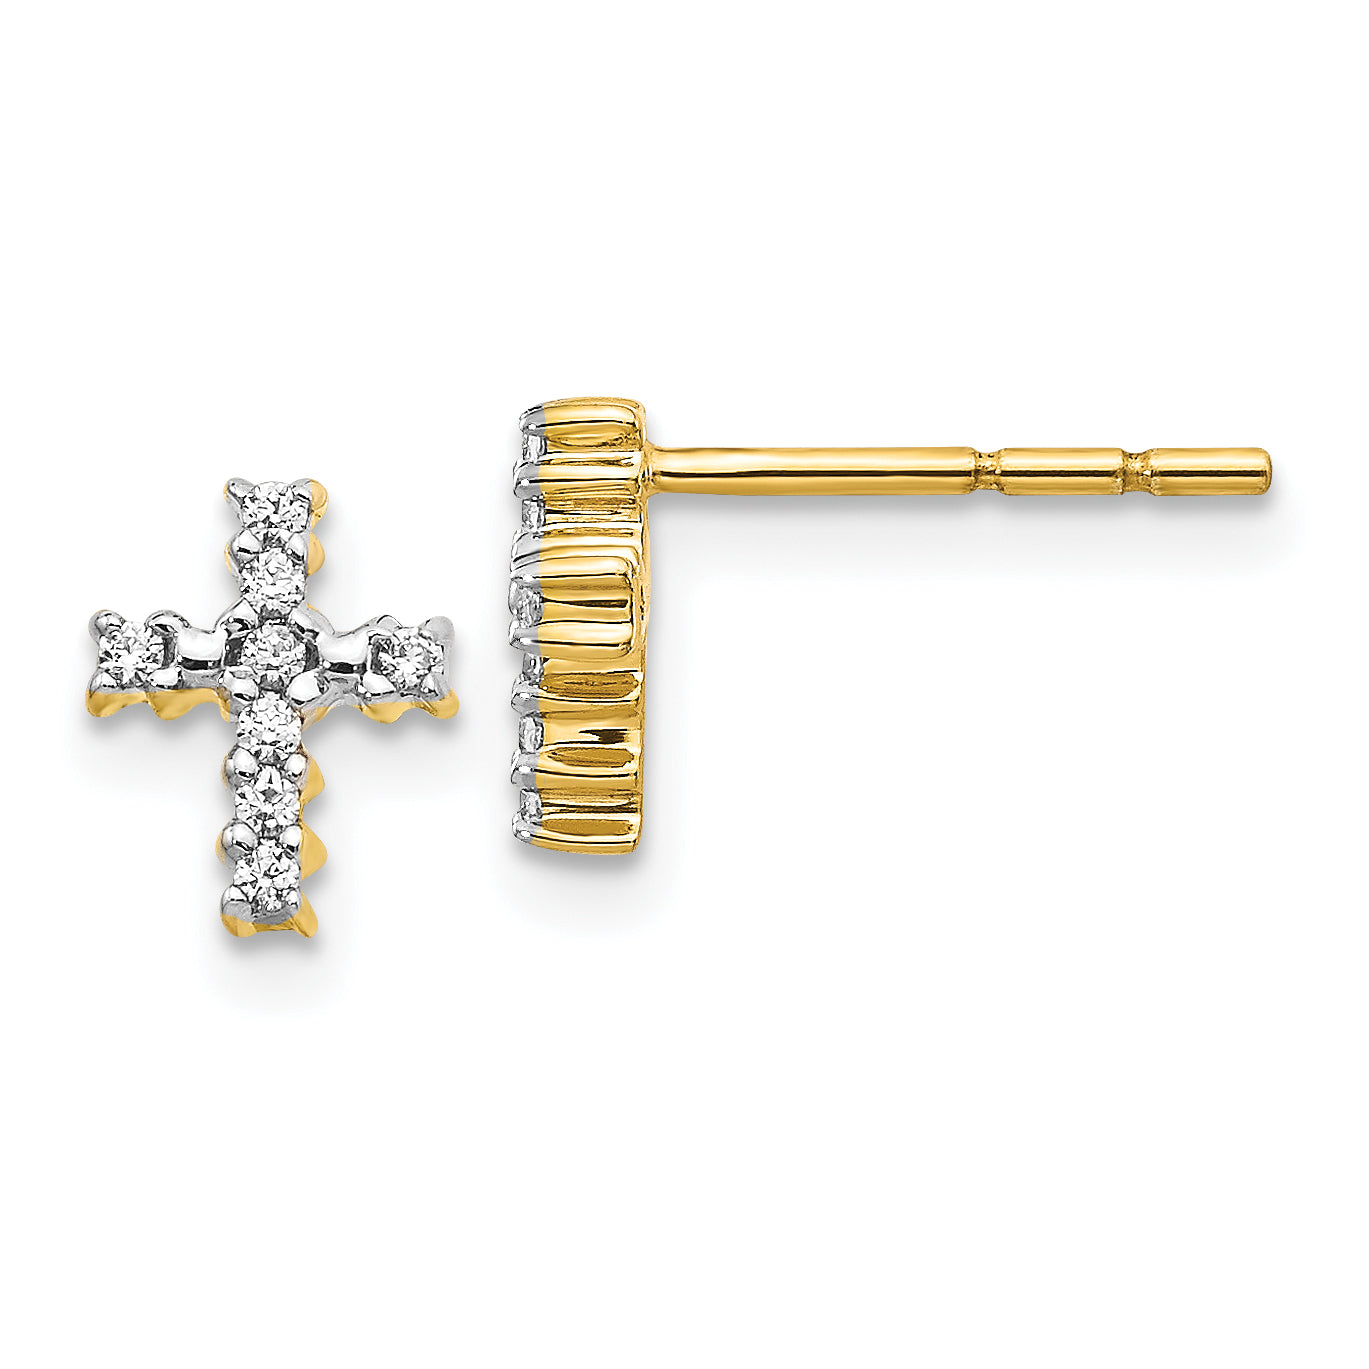 10k Gold Polished Diamond Cross Post Earrings